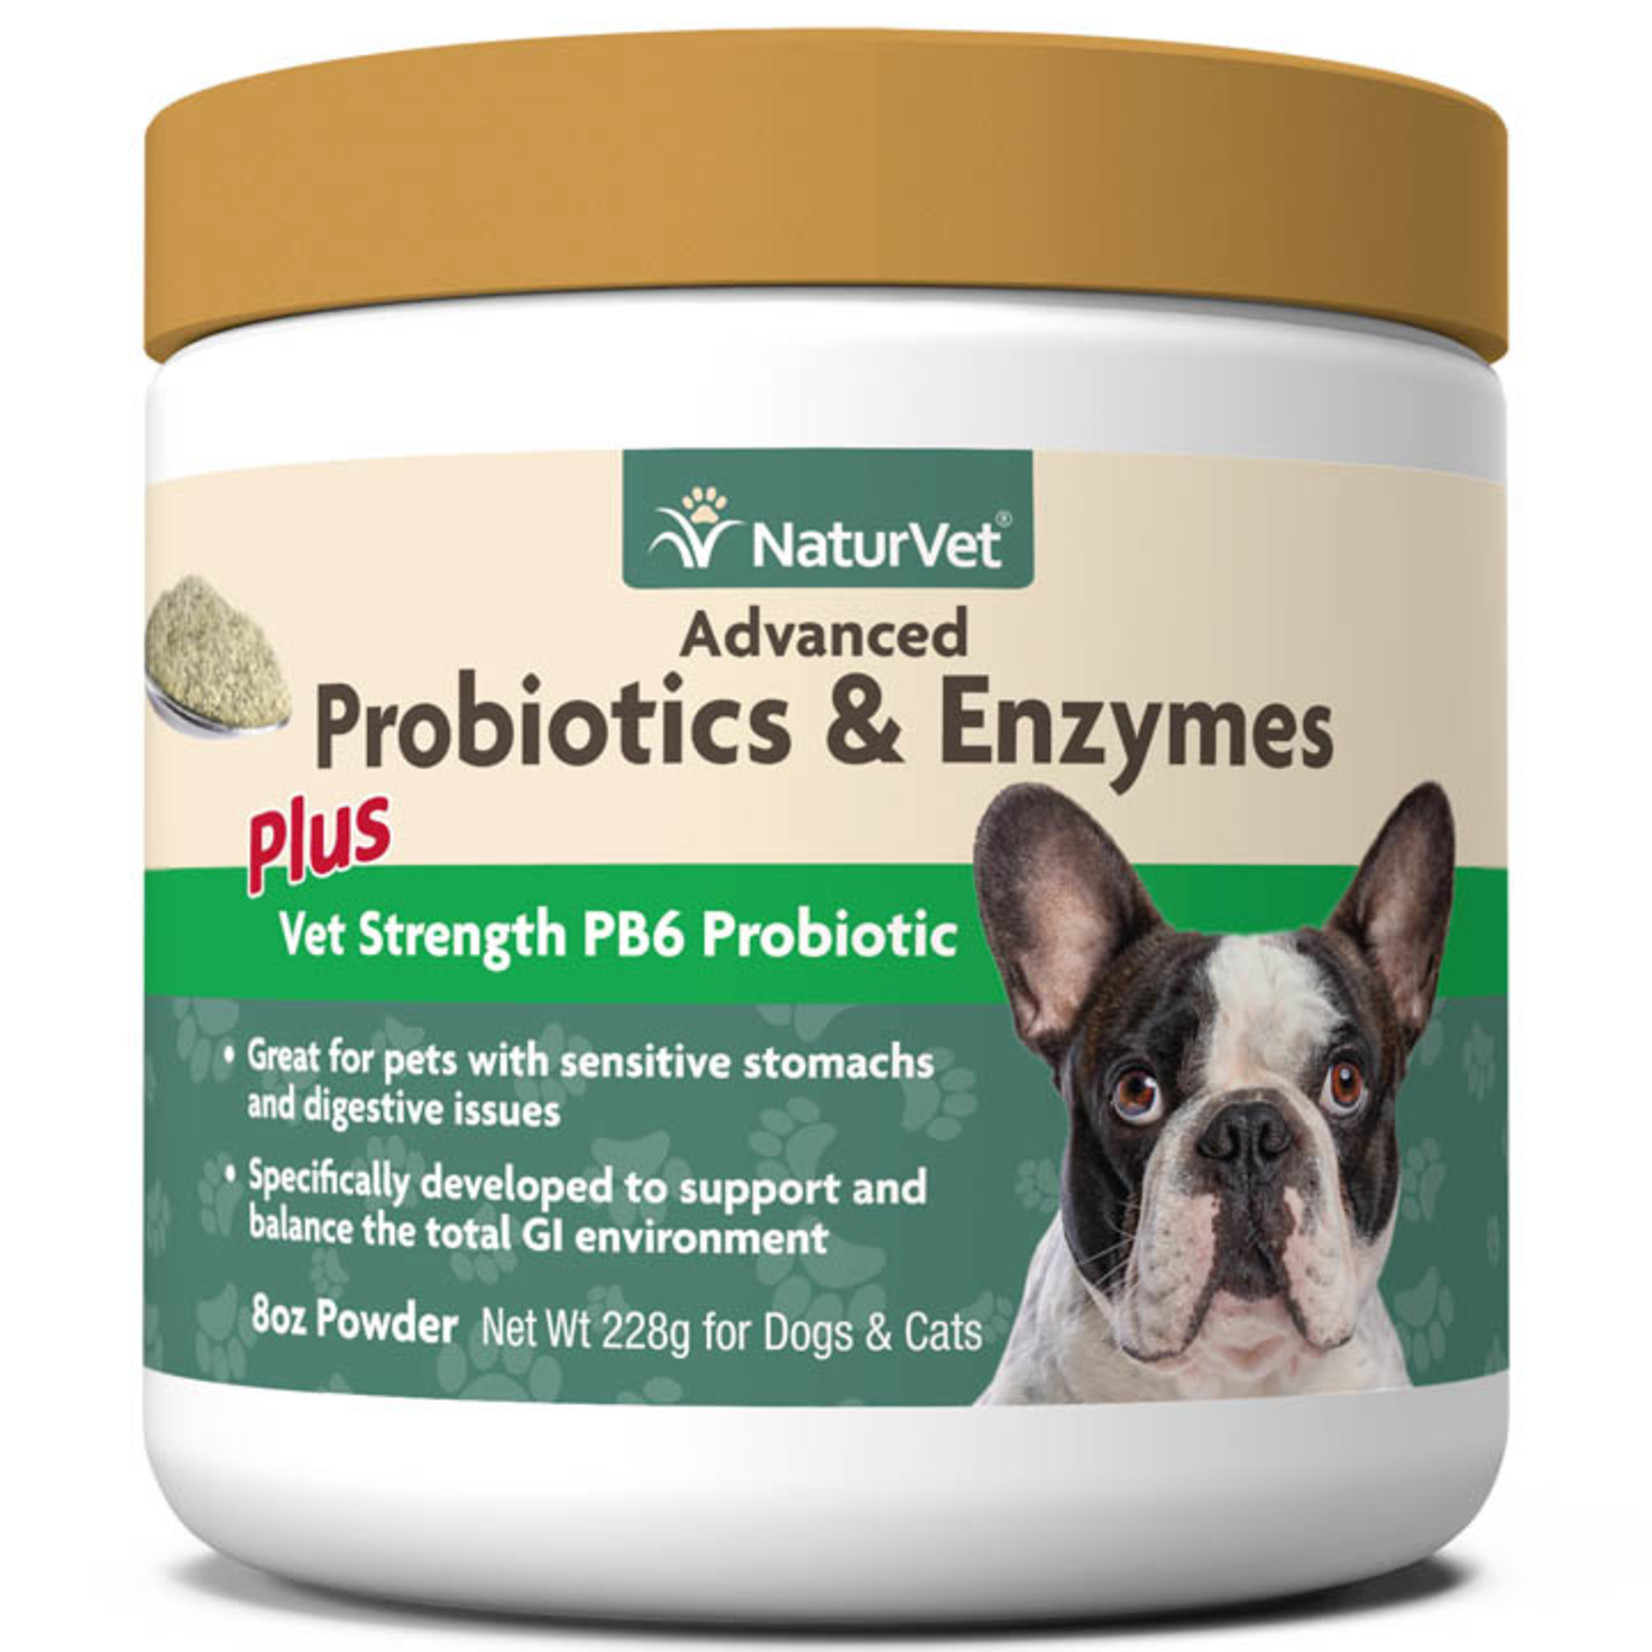 NaturVet NaturVet Advanced Probiotics & Enzymes Plus Vet Strength PB6 Probiotic Powder Digestive Supplement for Cats & Dogs 8oz